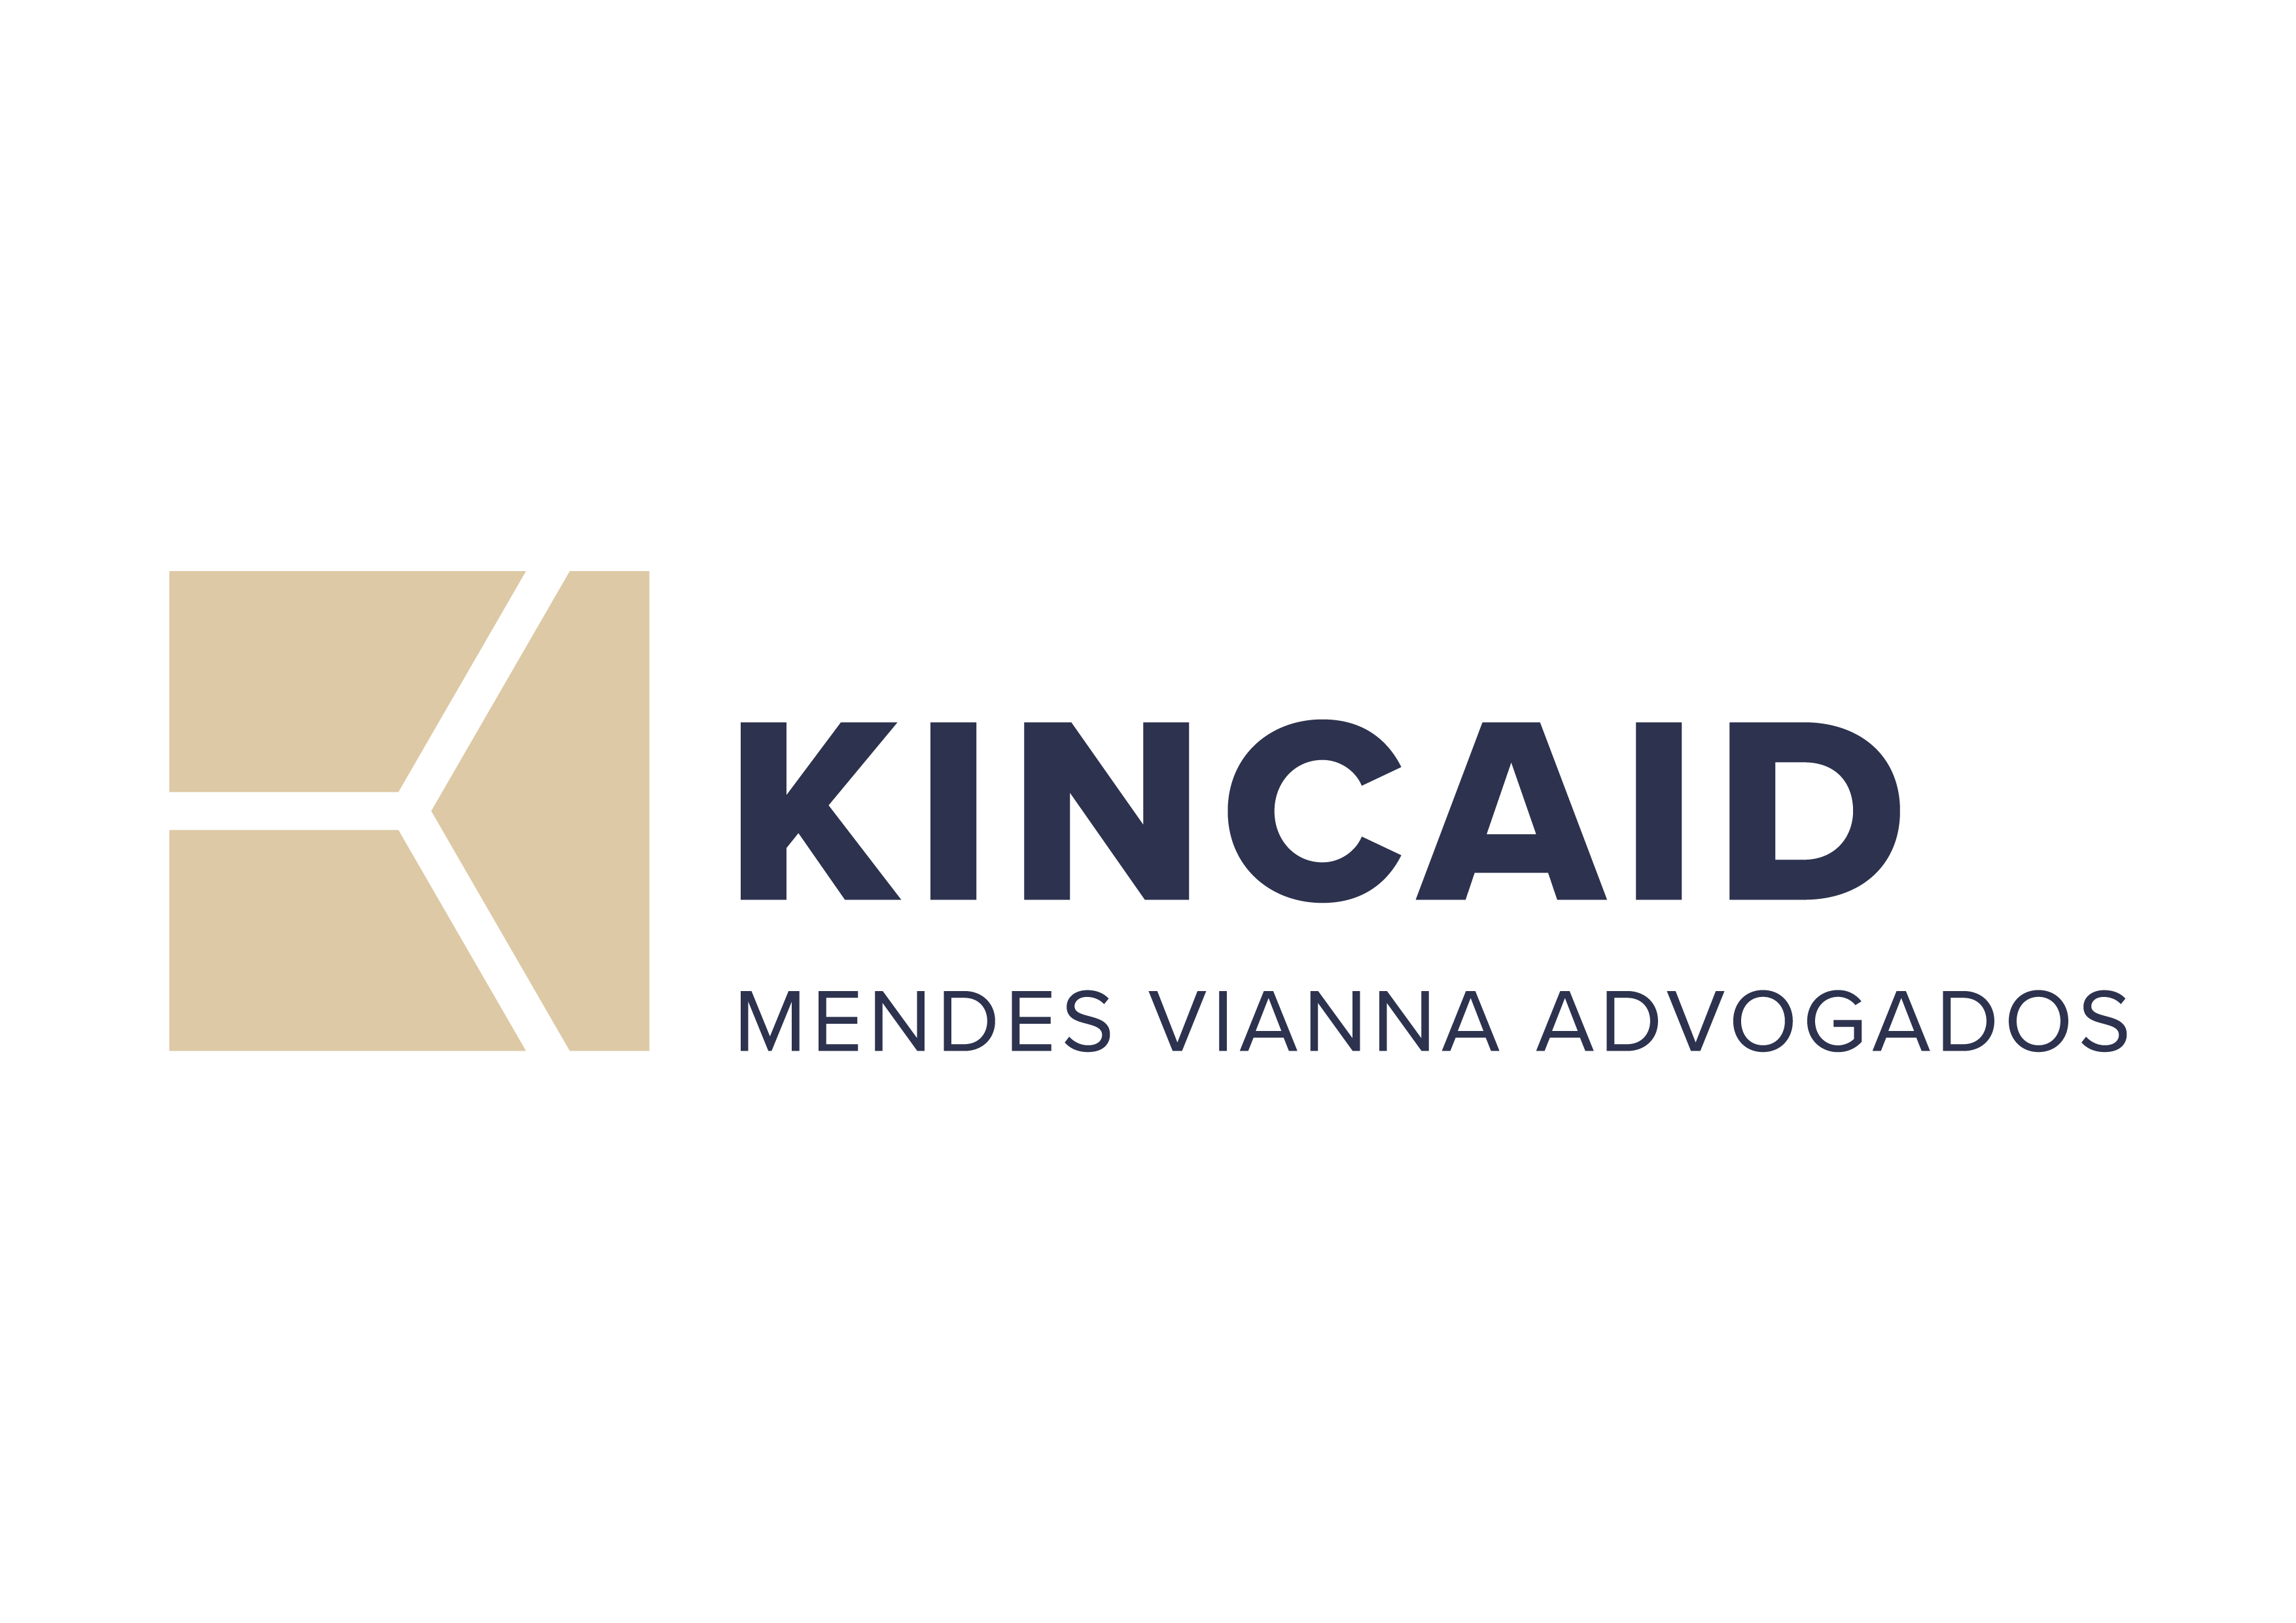 Kincaid-Logo-Descritivo-Horizontal-Positivo-RGB